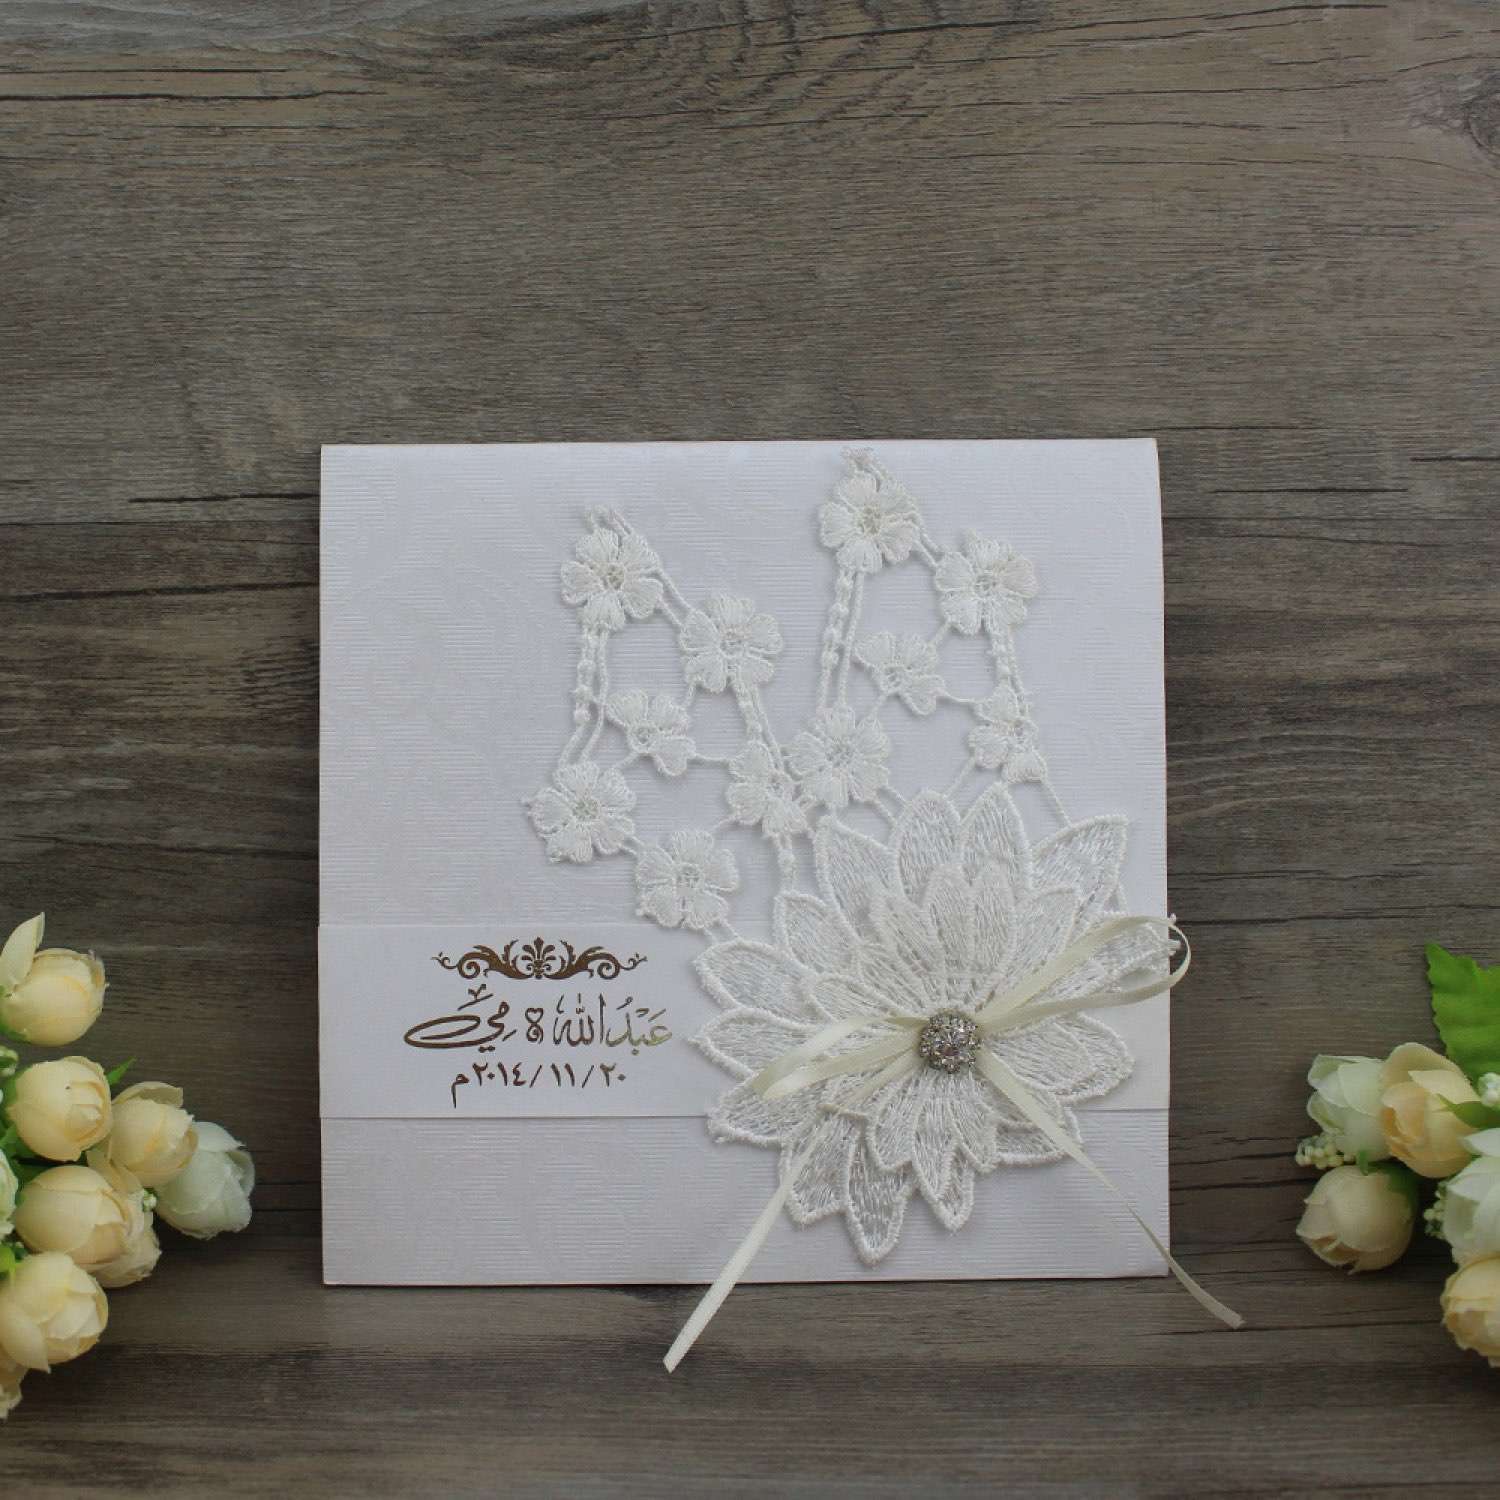 Lace Flower Invitation Wedding Invitation Card Customized Foiling Card 